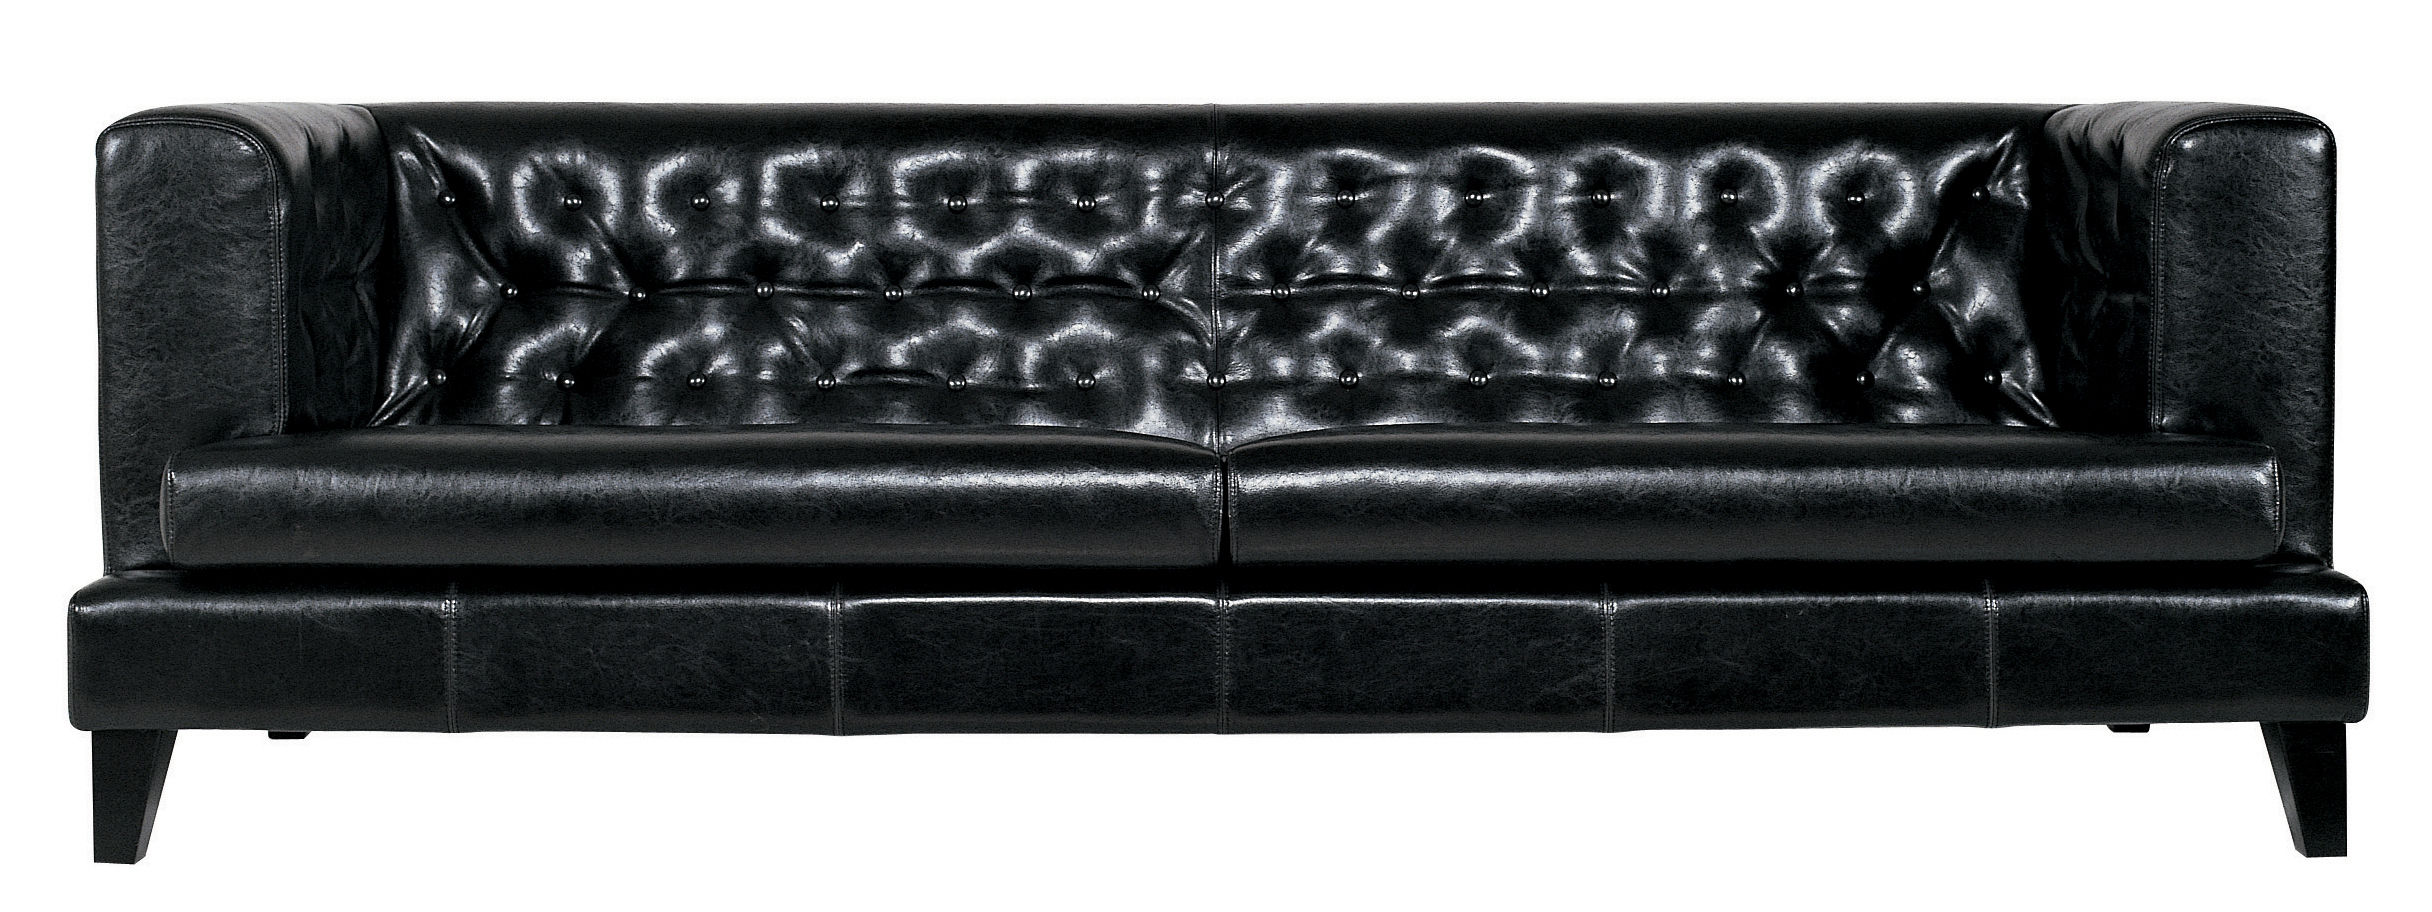 Canapé droit Hall / Cuir - 3 places - L 230 cm - Driade noir en cuir